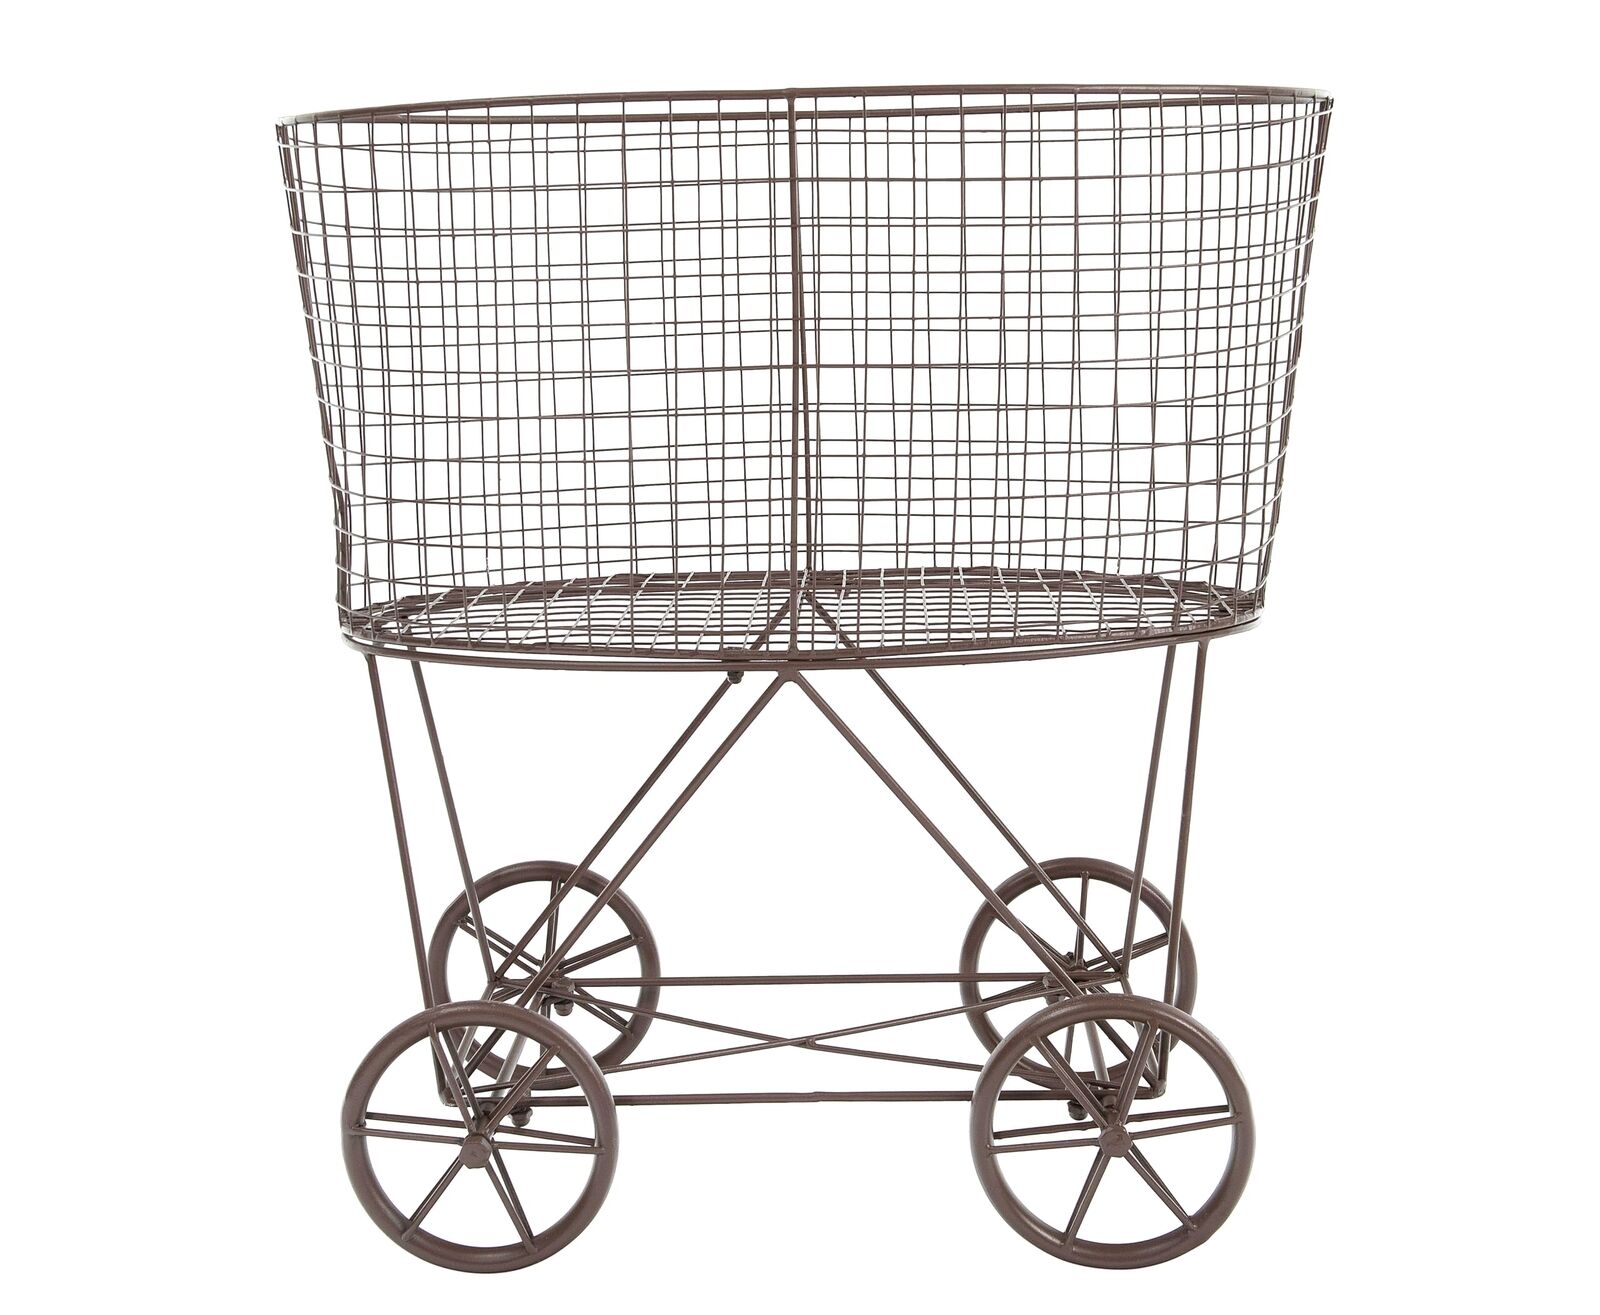 Vintage Reproduction Metal Laundry Basket on Wheels, Rust